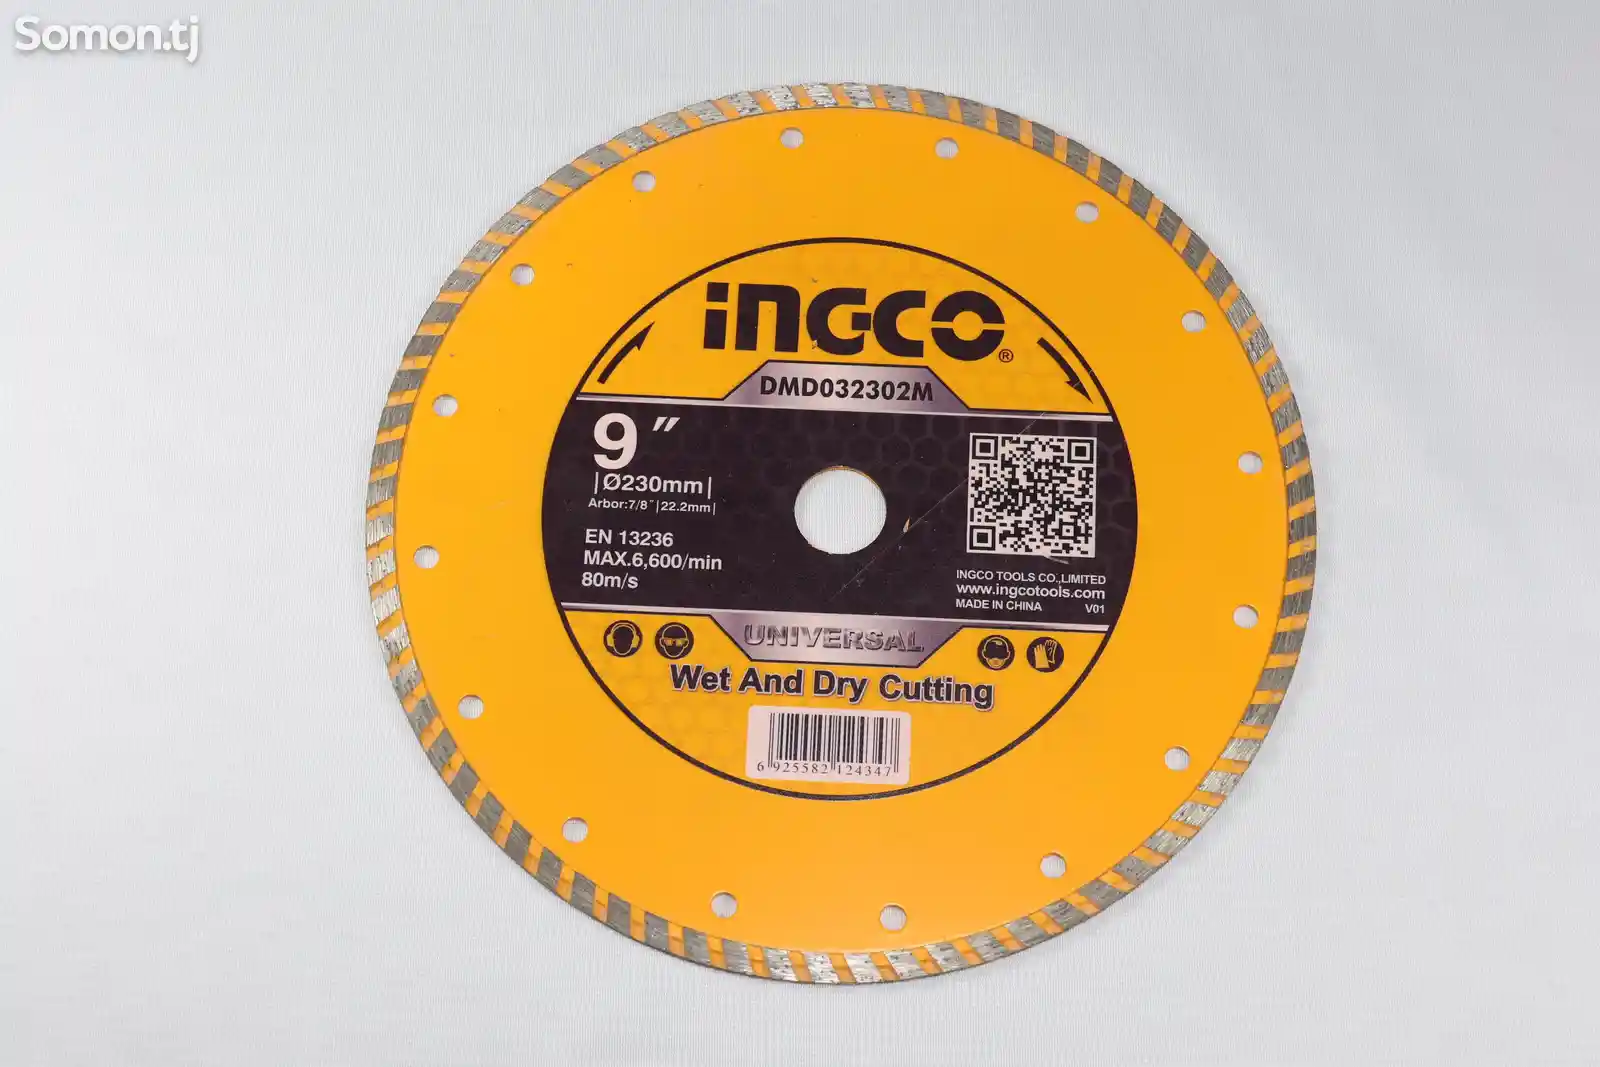 Алмазный диск Ingco 230мм DMD032302M